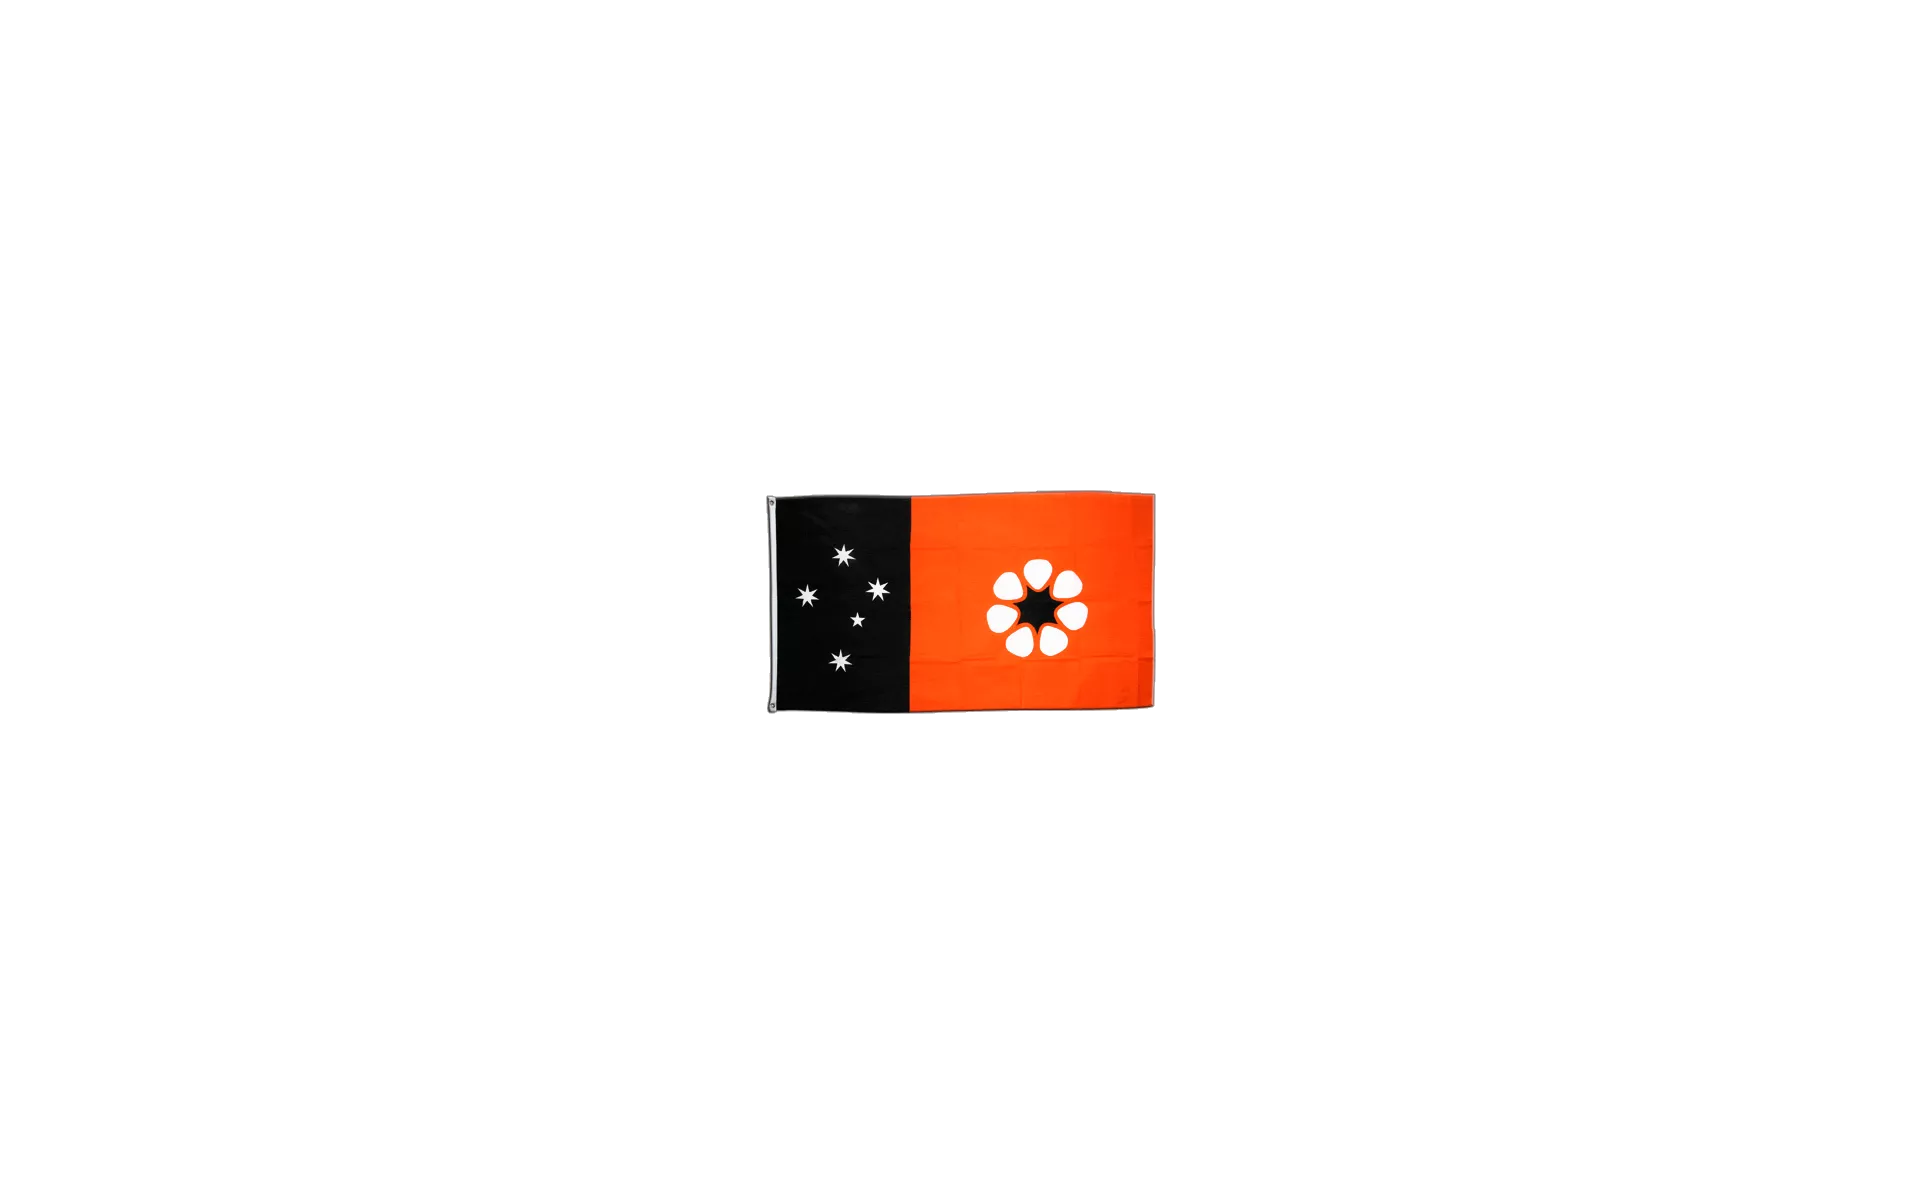 90 x 150 cm Fahnen Flagge Australien Northern Territory 